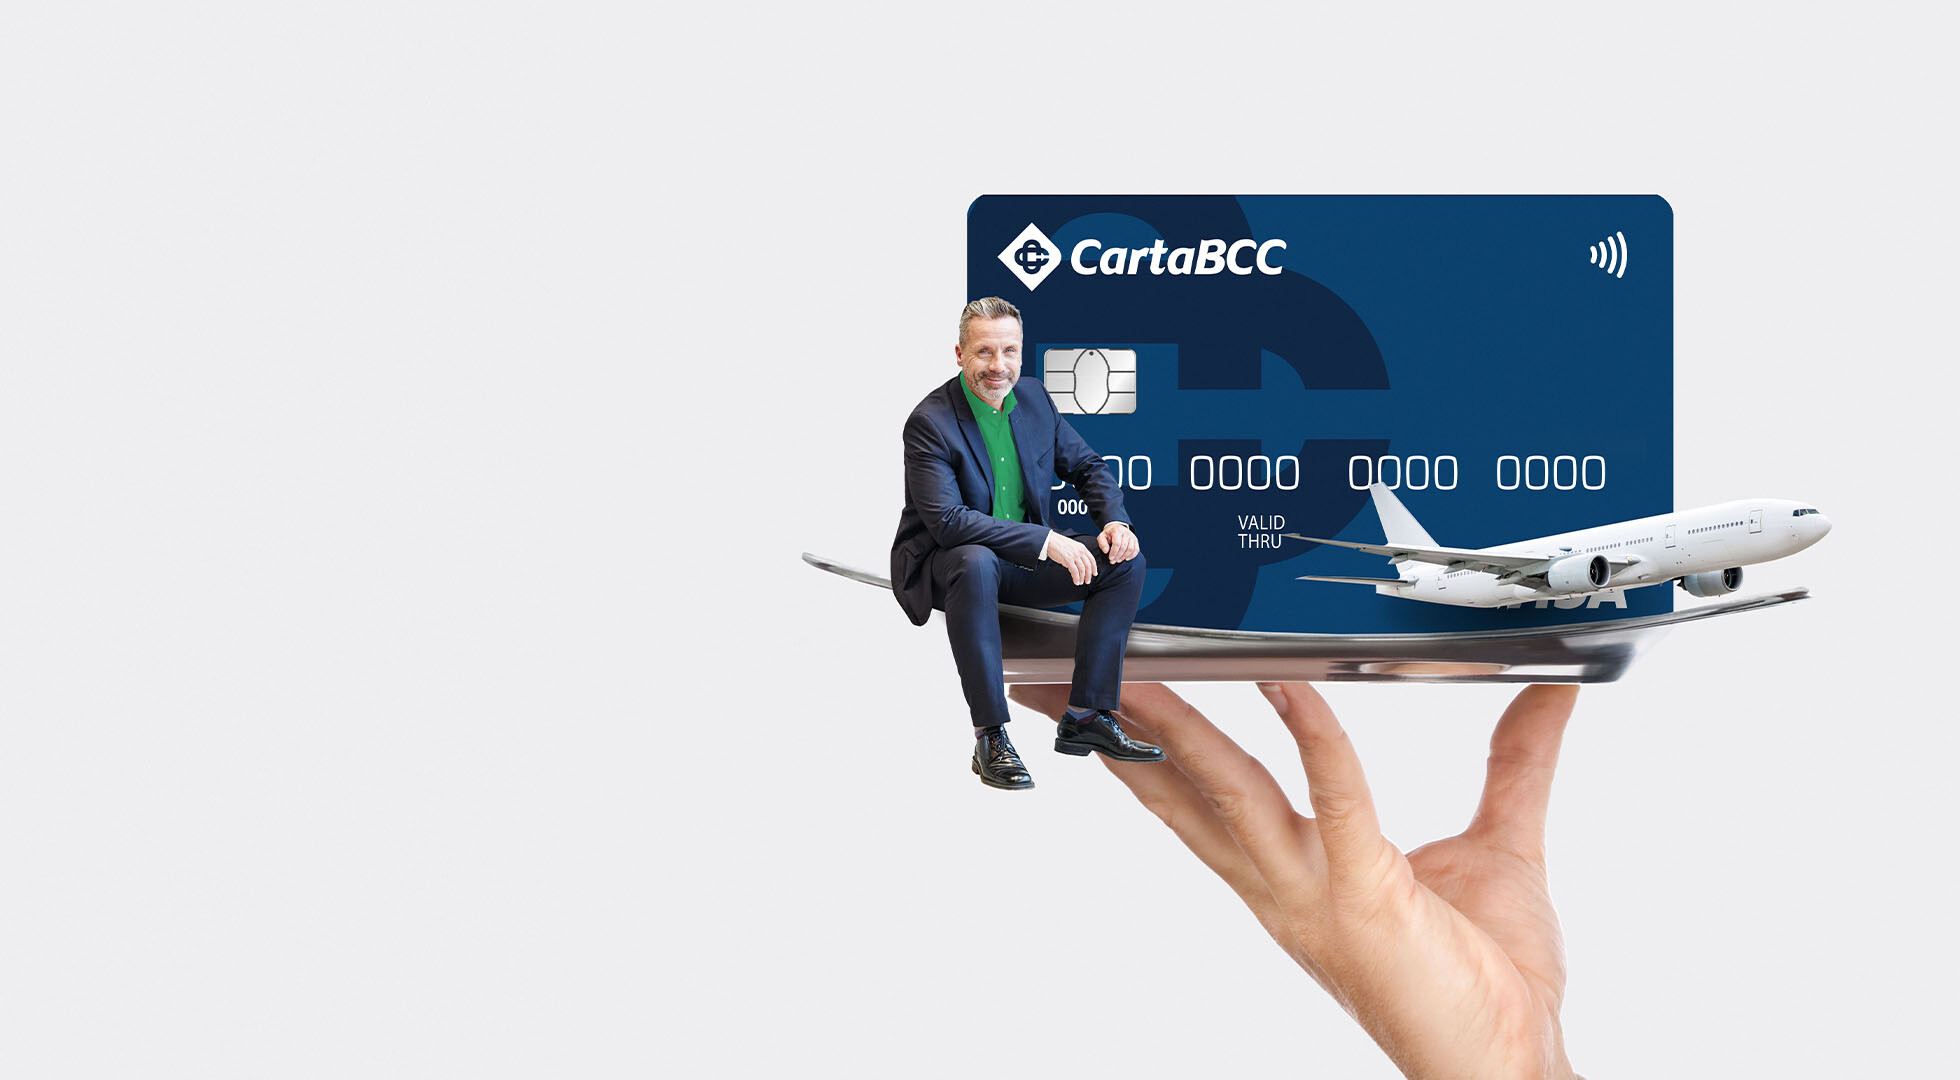 CartaBCC Corporate